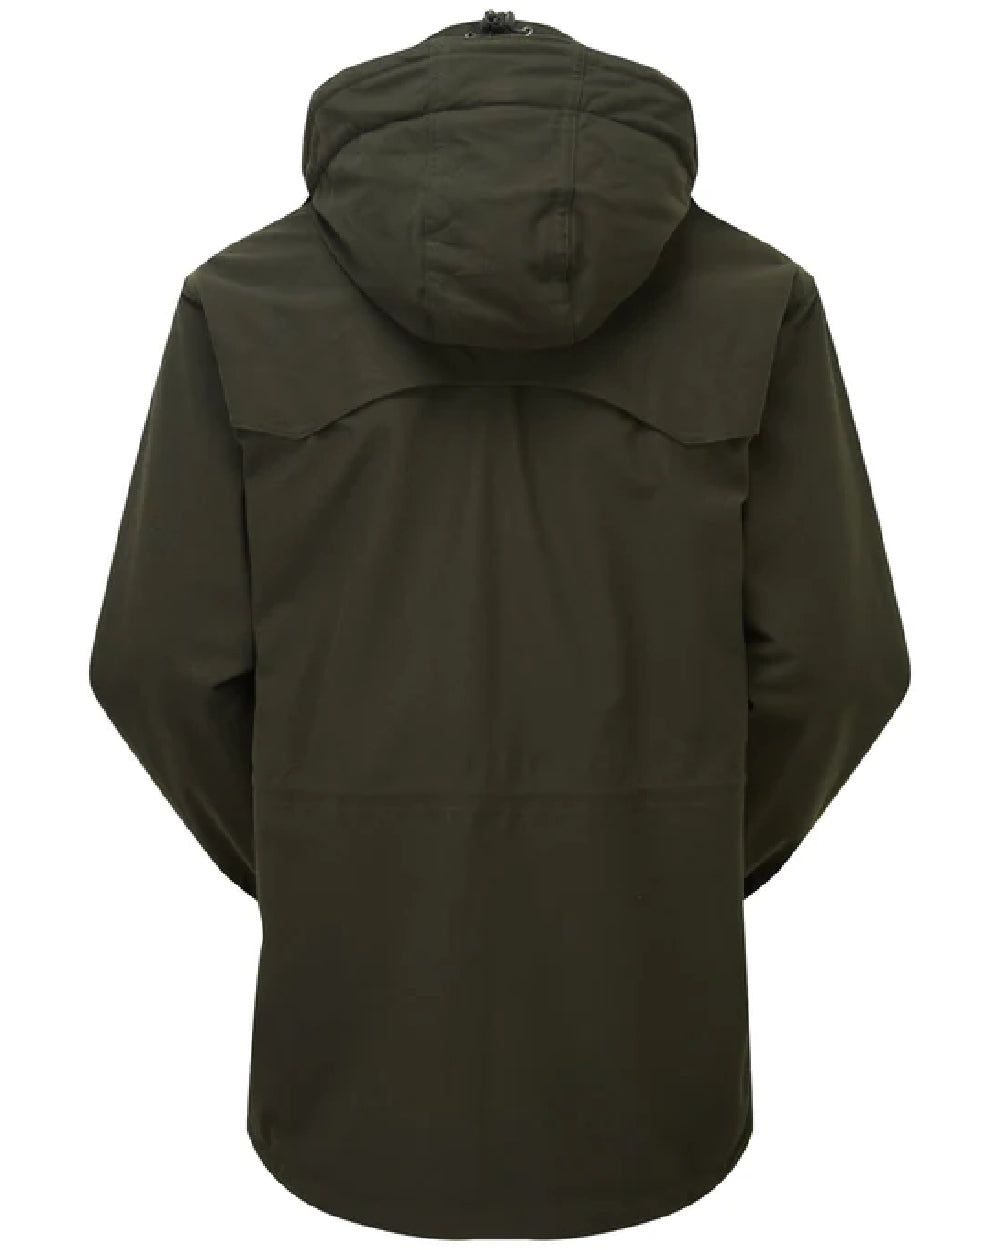 Olive coloured Ridgeline Torrent III Waterproof Jacket on white background 